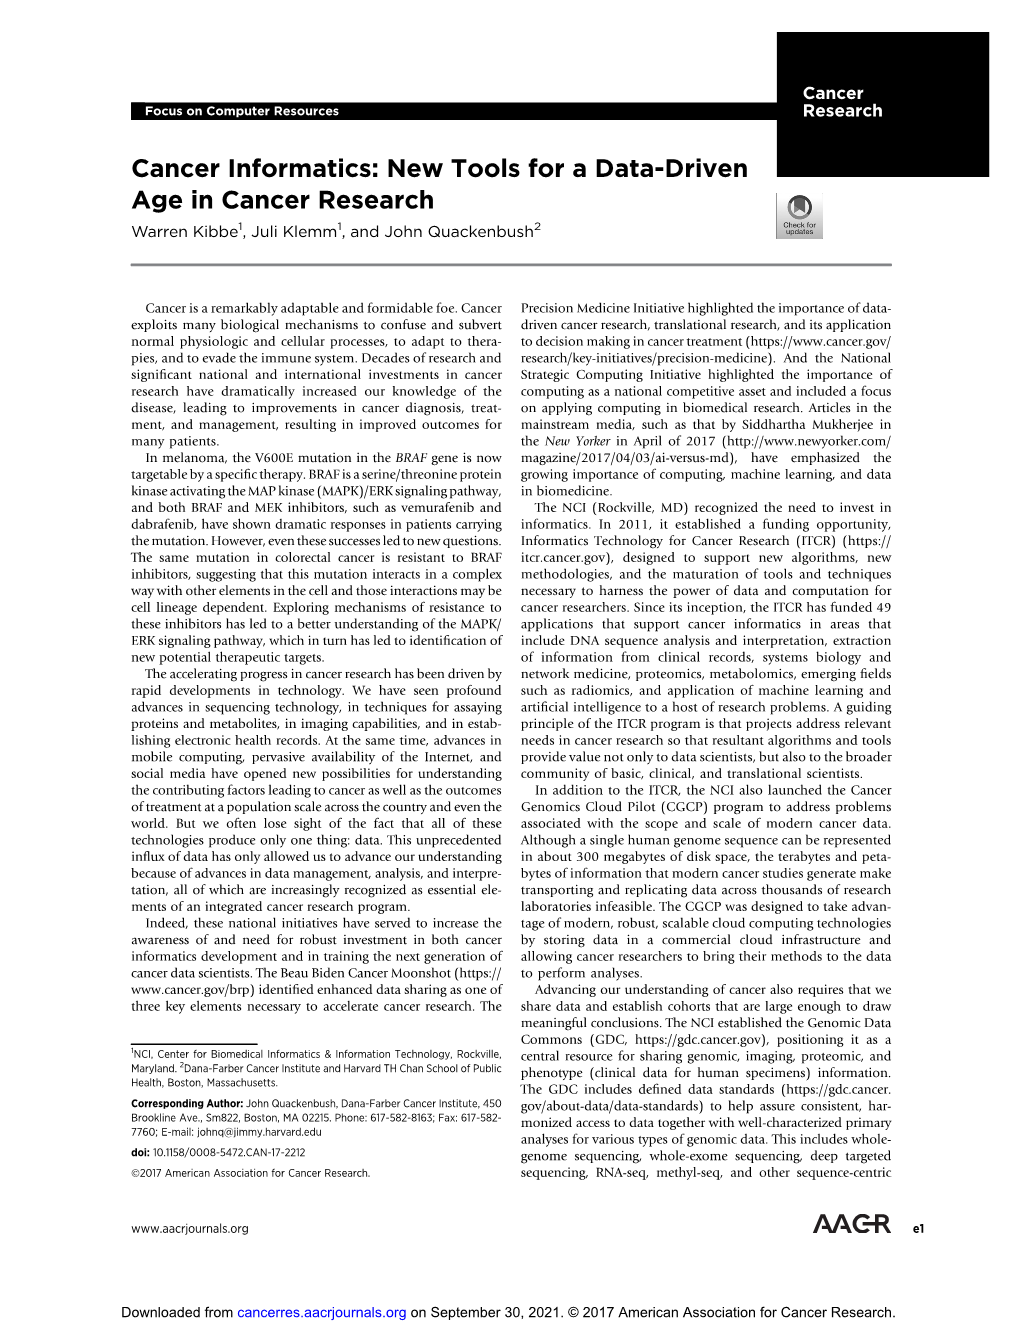 Cancer Informatics: New Tools for a Data-Driven Age in Cancer Research Warren Kibbe1, Juli Klemm1, and John Quackenbush2